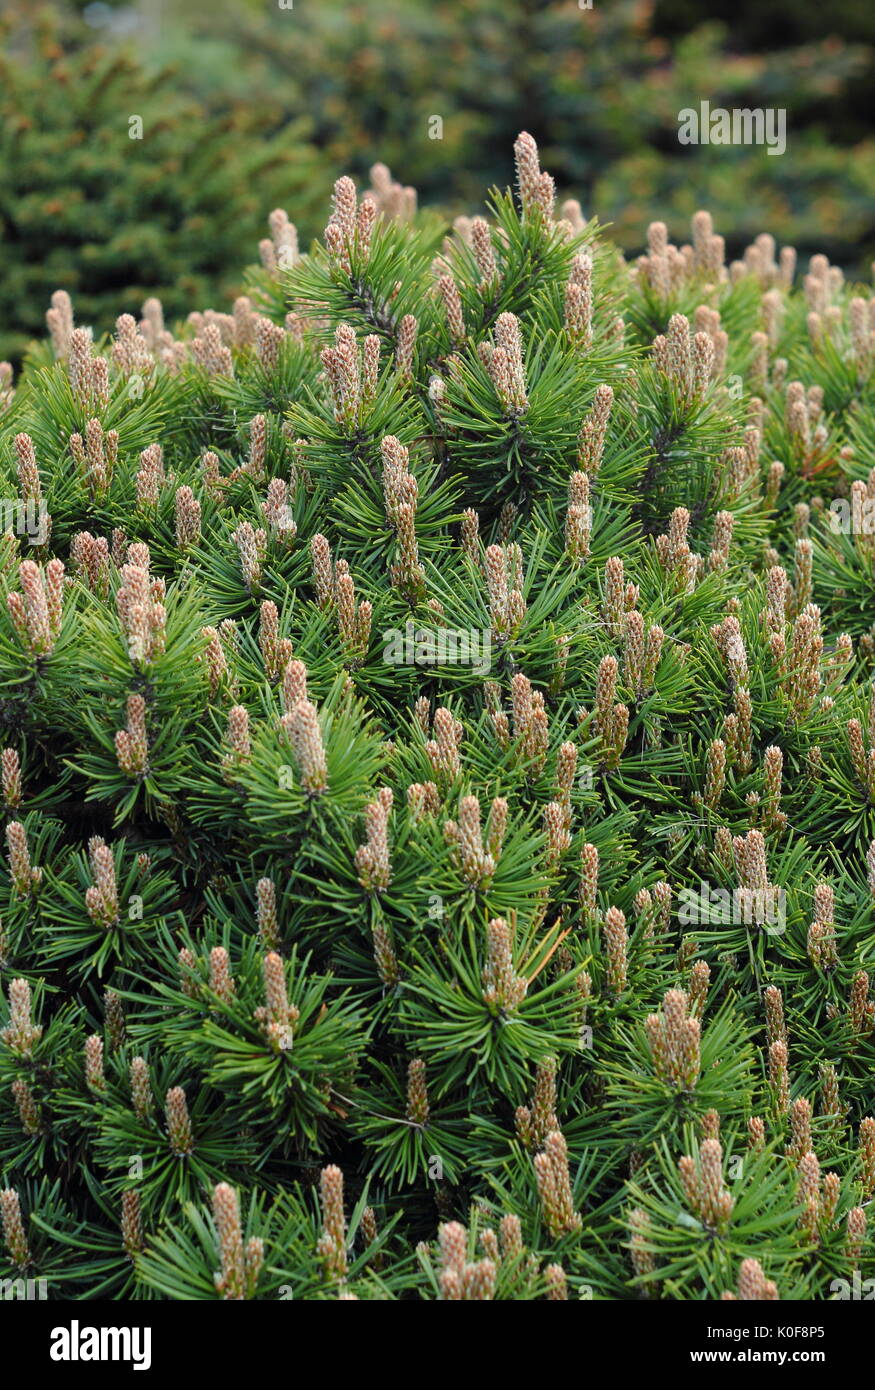 Dwarf Mountain Pine (Pinus mugo) var. "Piggelmee', con forma de globo terráqueo un pino enano, en un jardín DEL REINO UNIDO Foto de stock